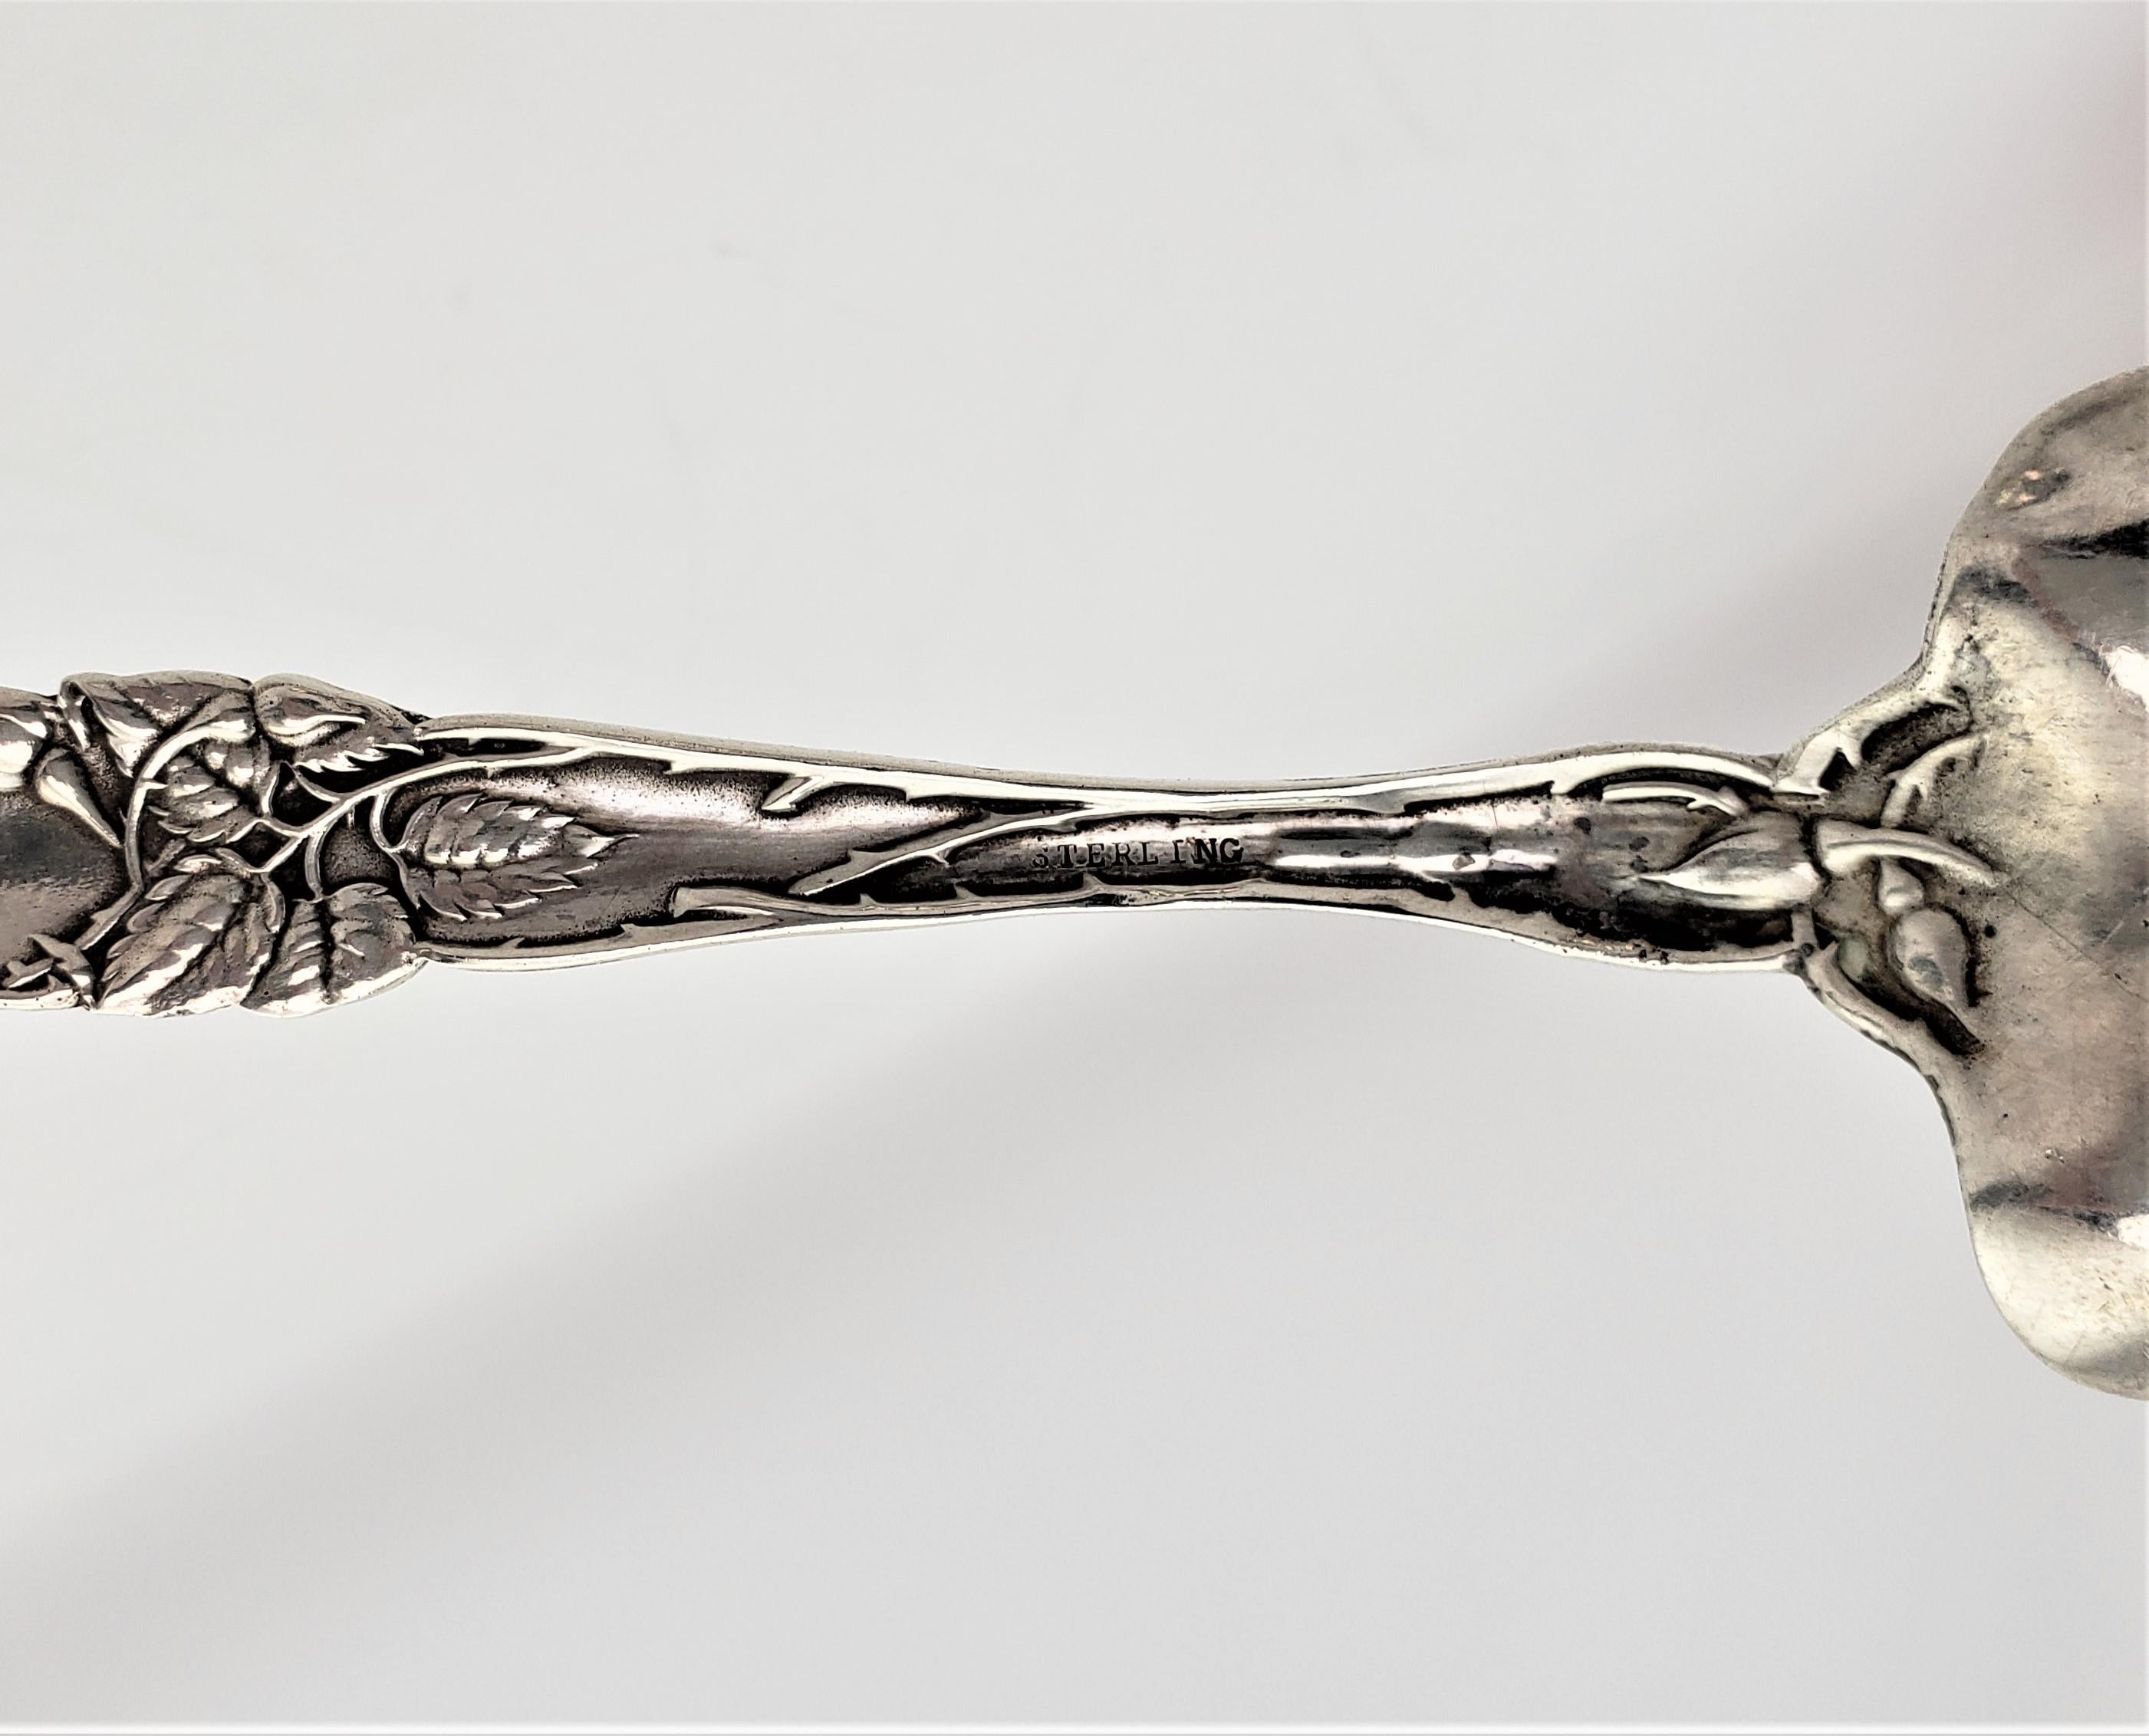 Antique American Art Nouveau Sterling Silver Serving Spoon Set with Floral Motif For Sale 1